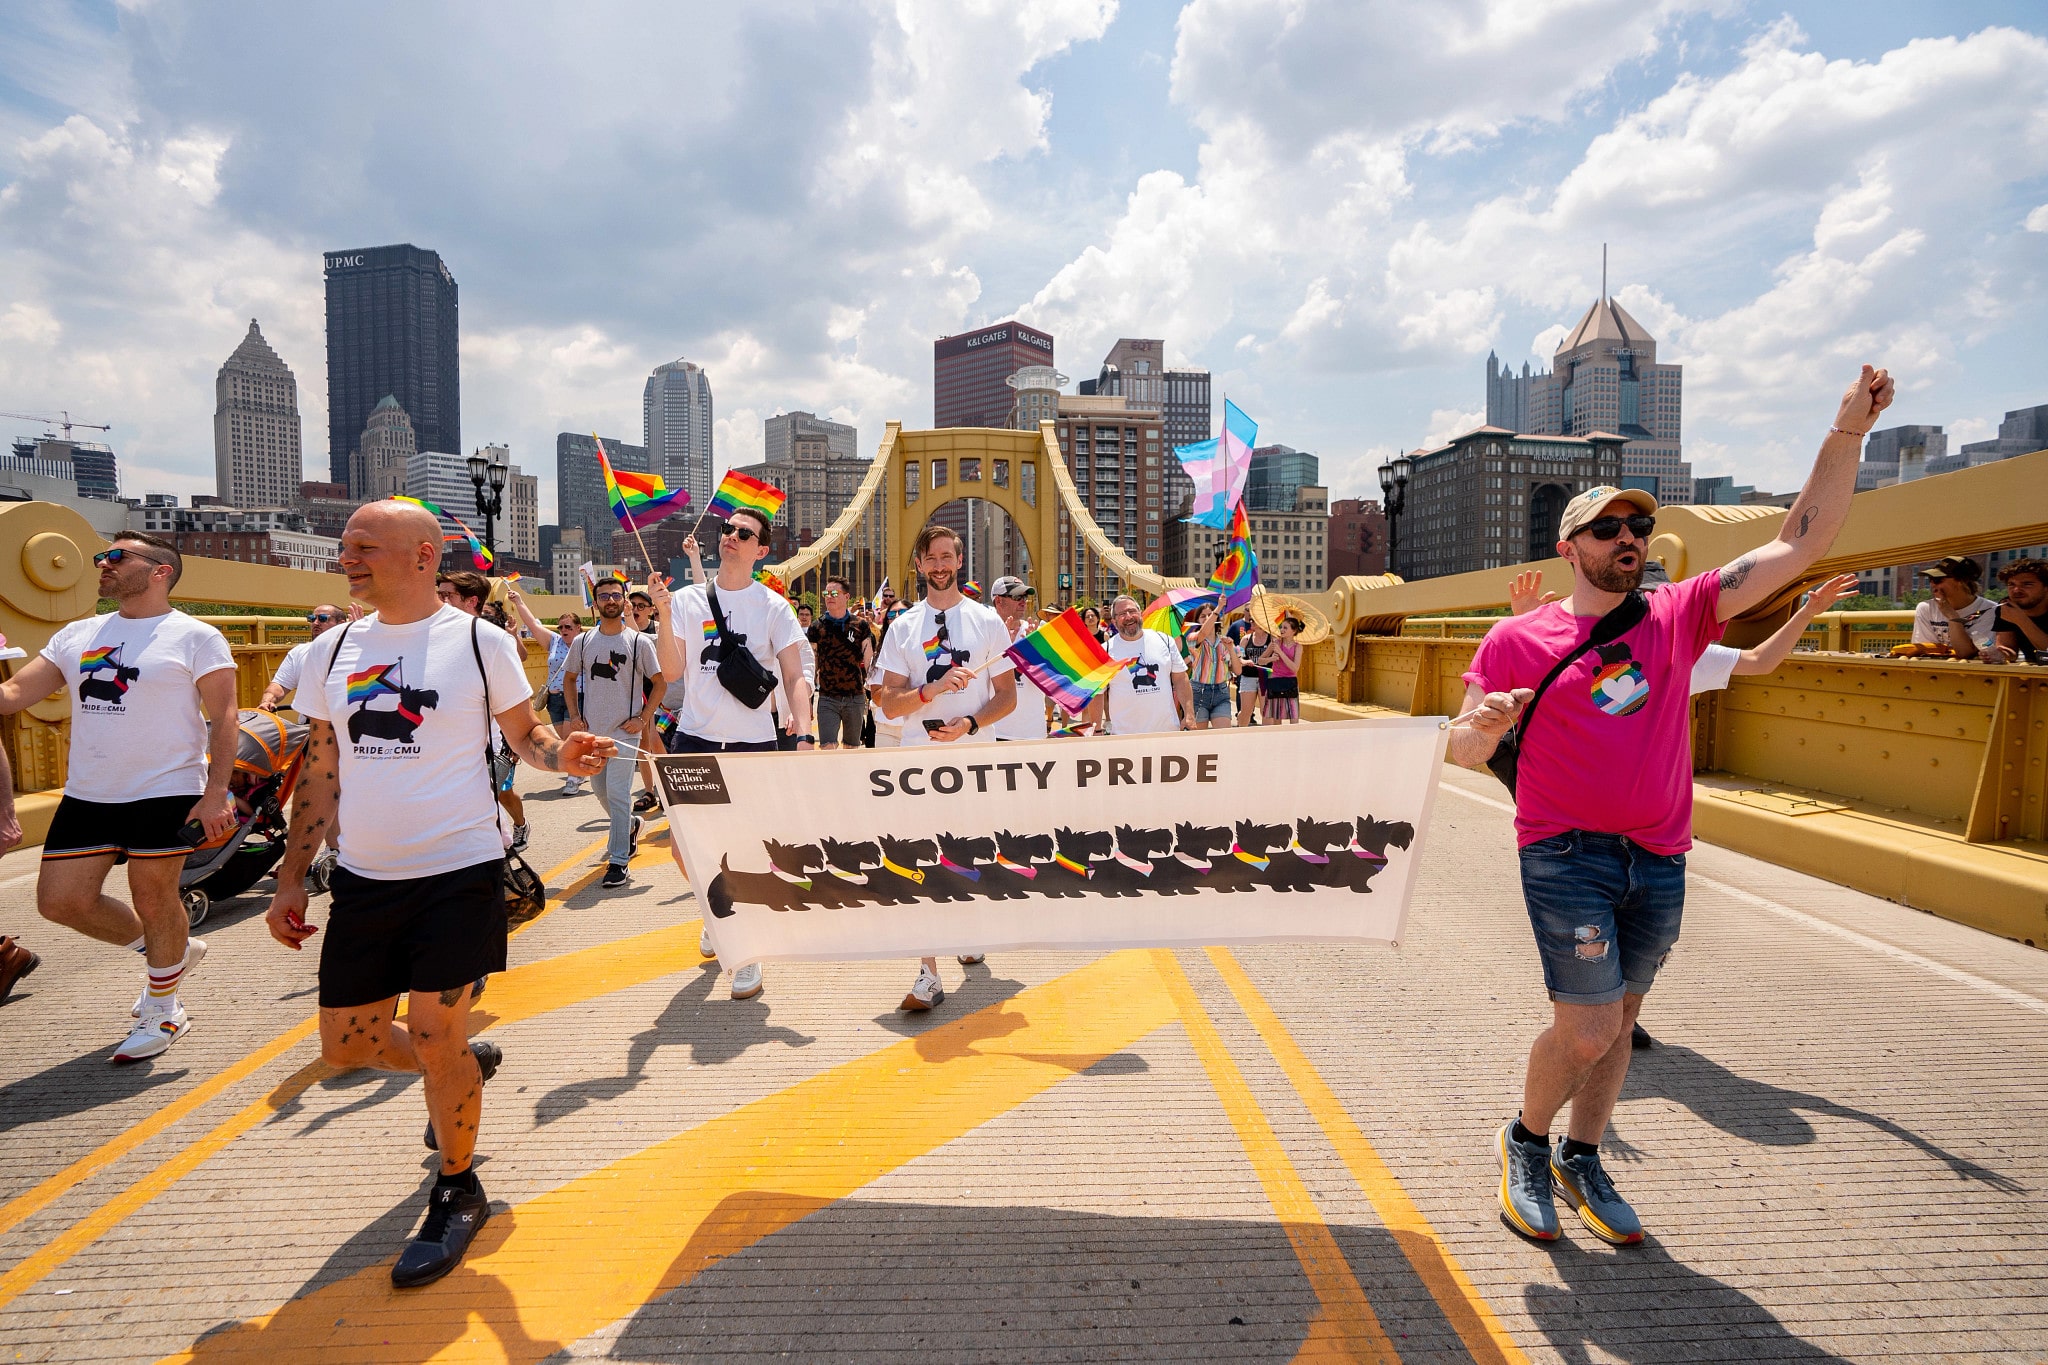 CMU participants marching across bridge carrying Scotty Pride banner